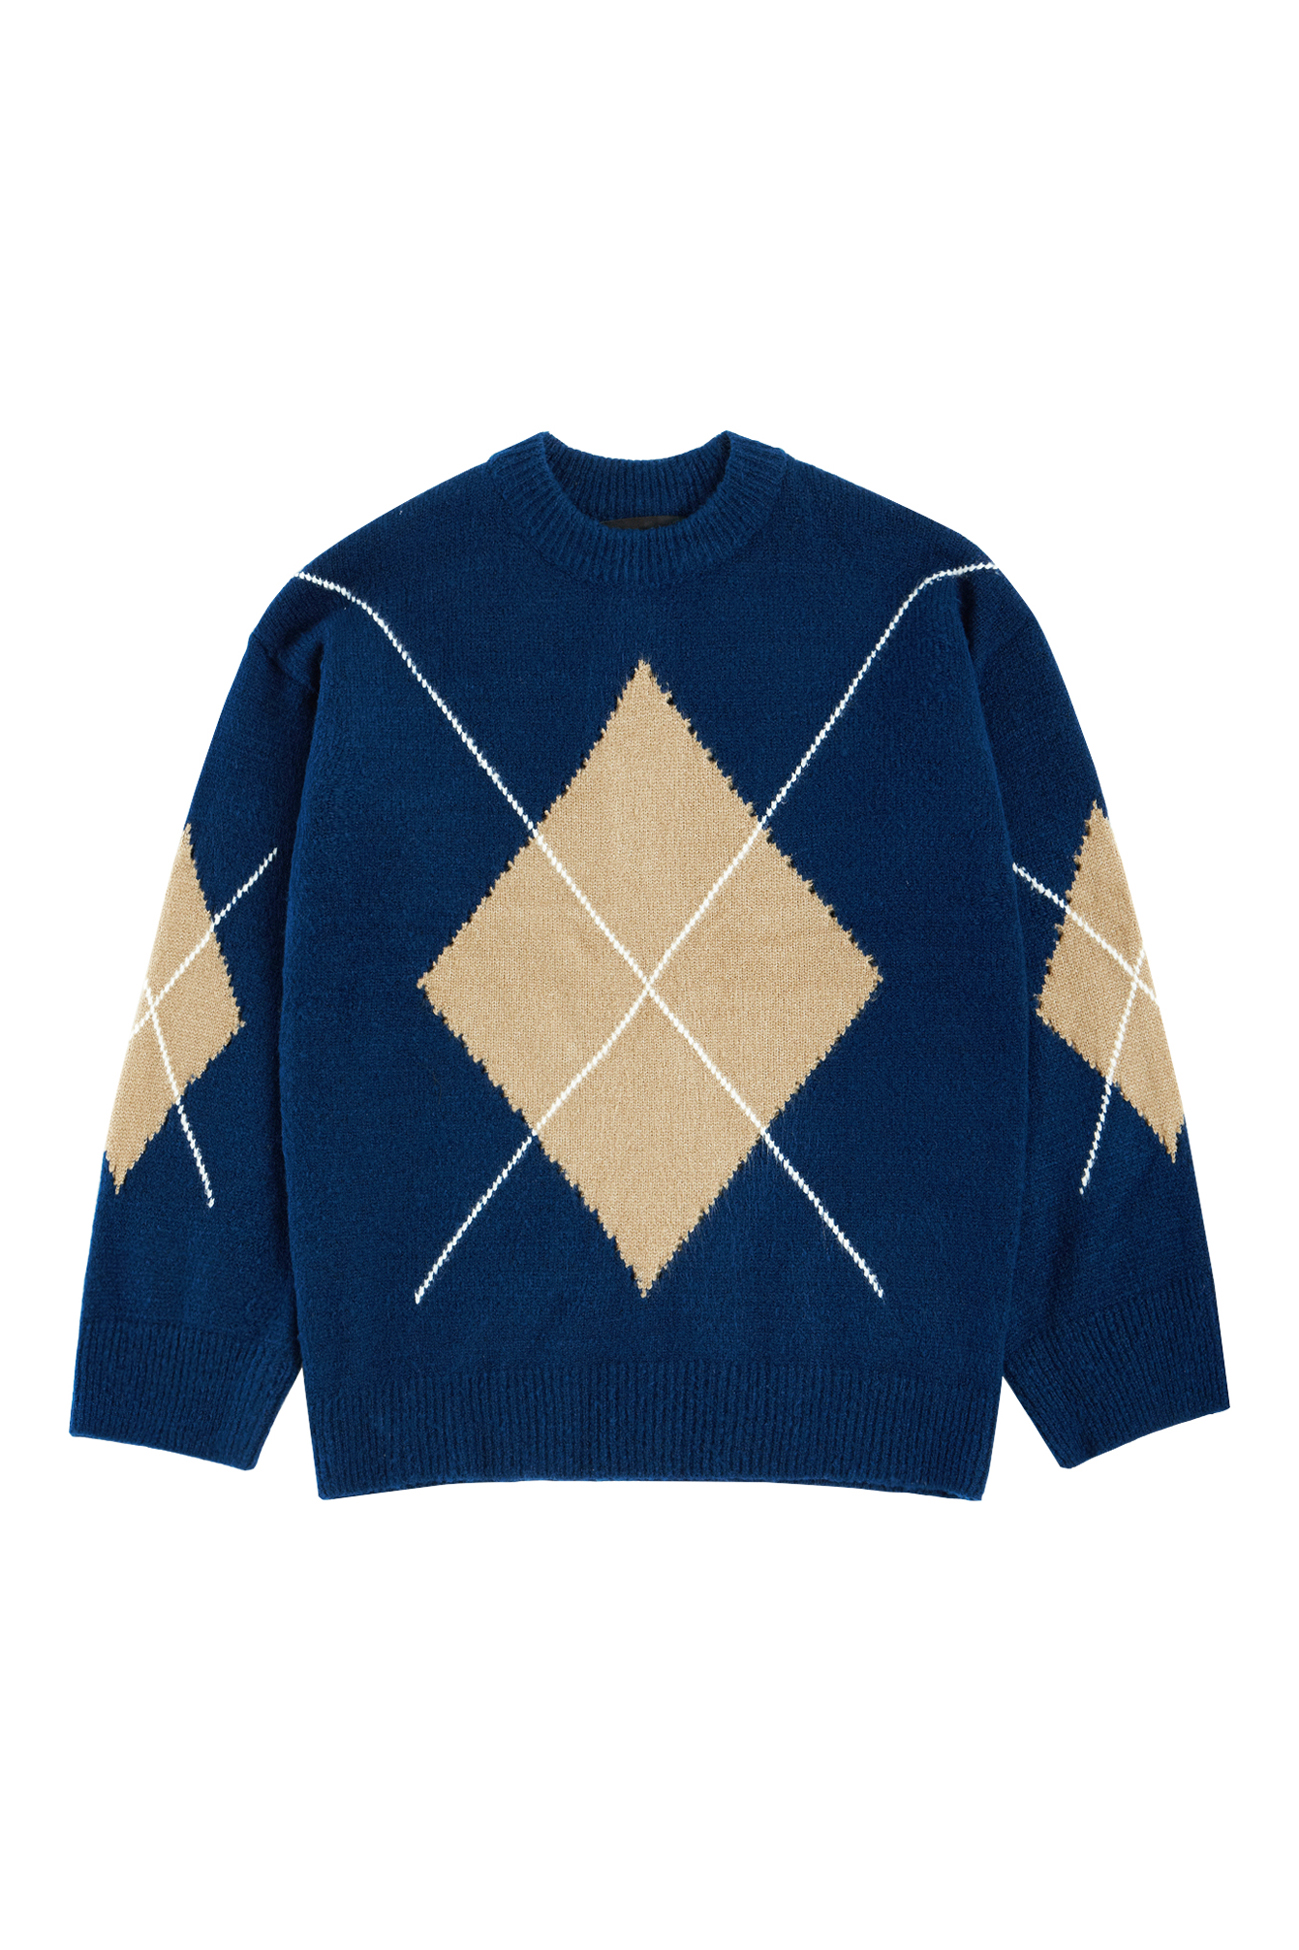 Argyle sweater navy